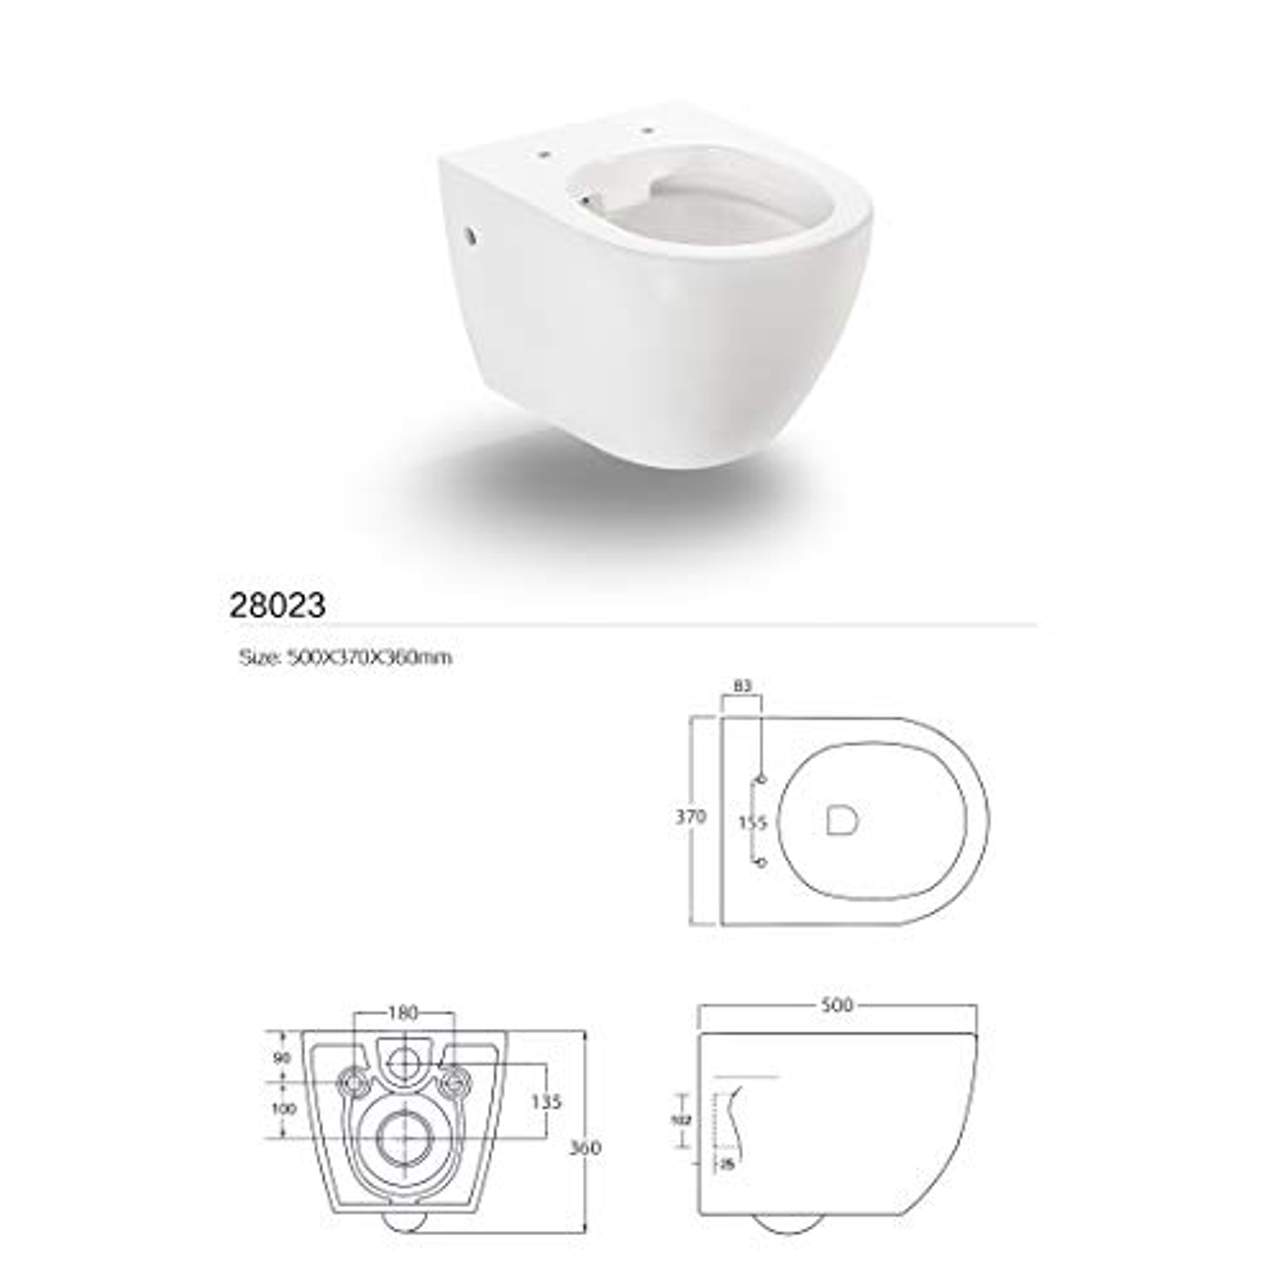 ADOB spülrandlose WC Keramik Nanoversiegelung Hänge WC Toilette